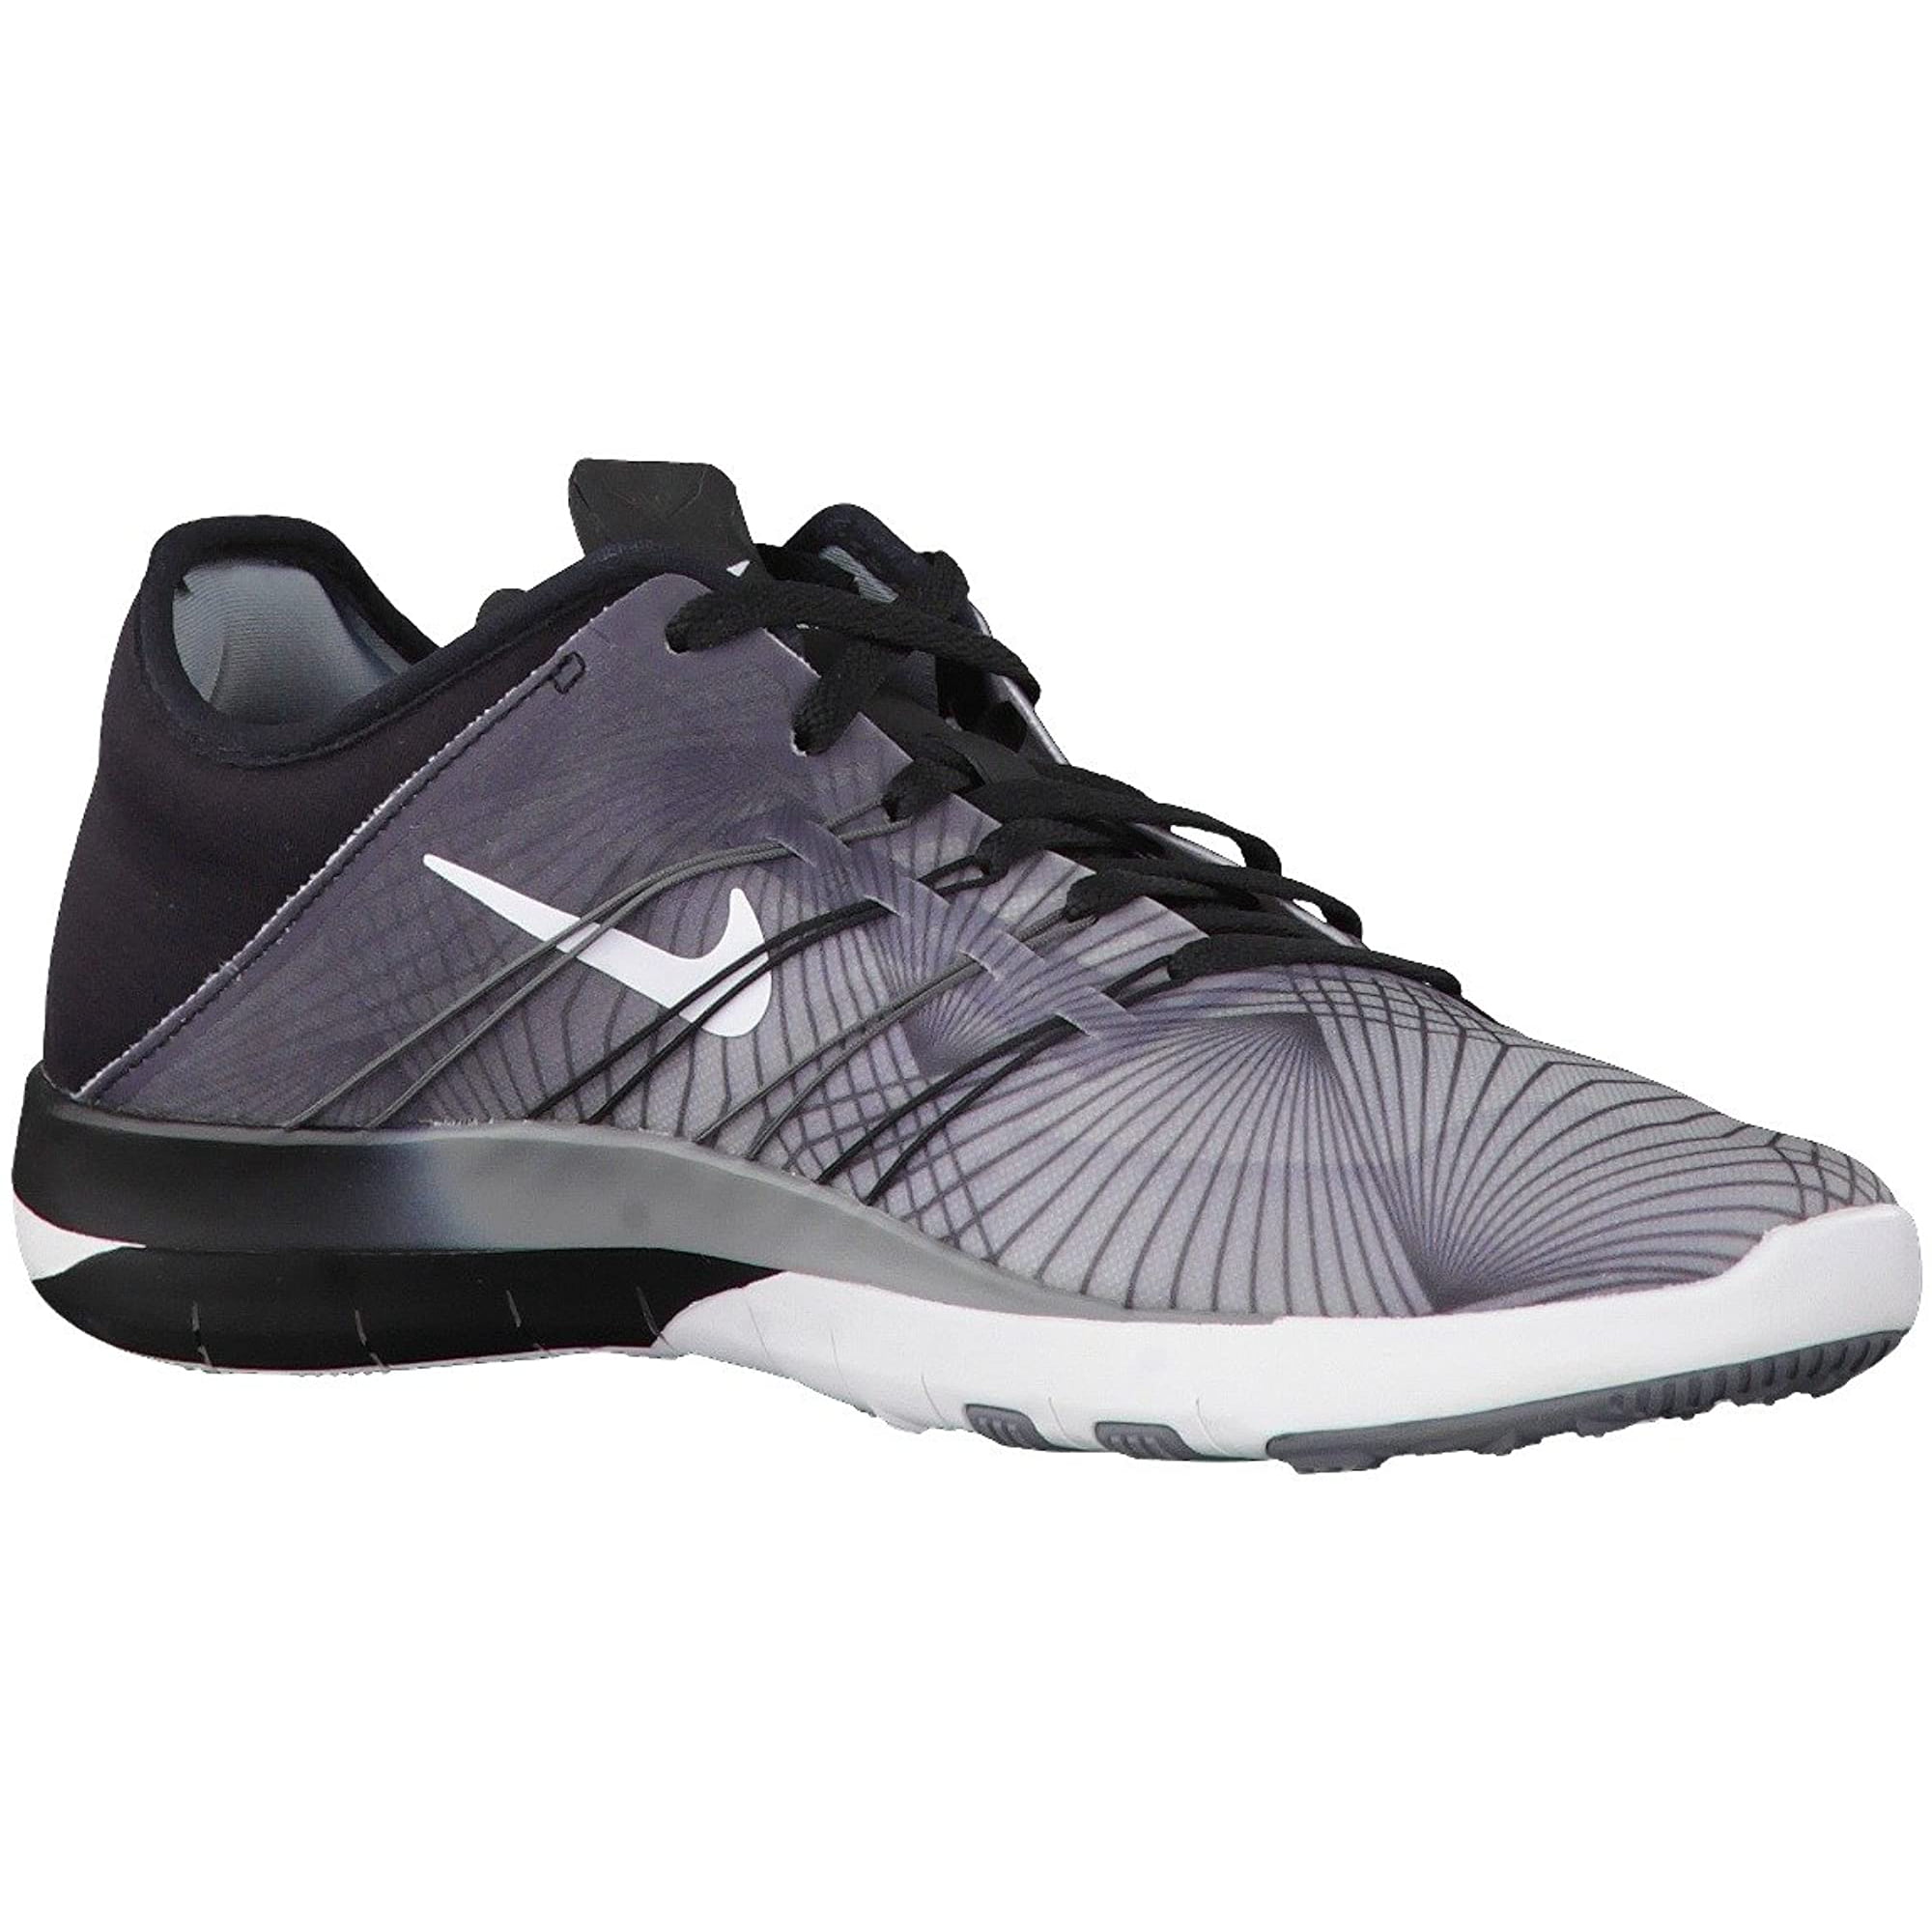 Nike TR 6 PRT Running Trainers Shoes | Walmart Canada